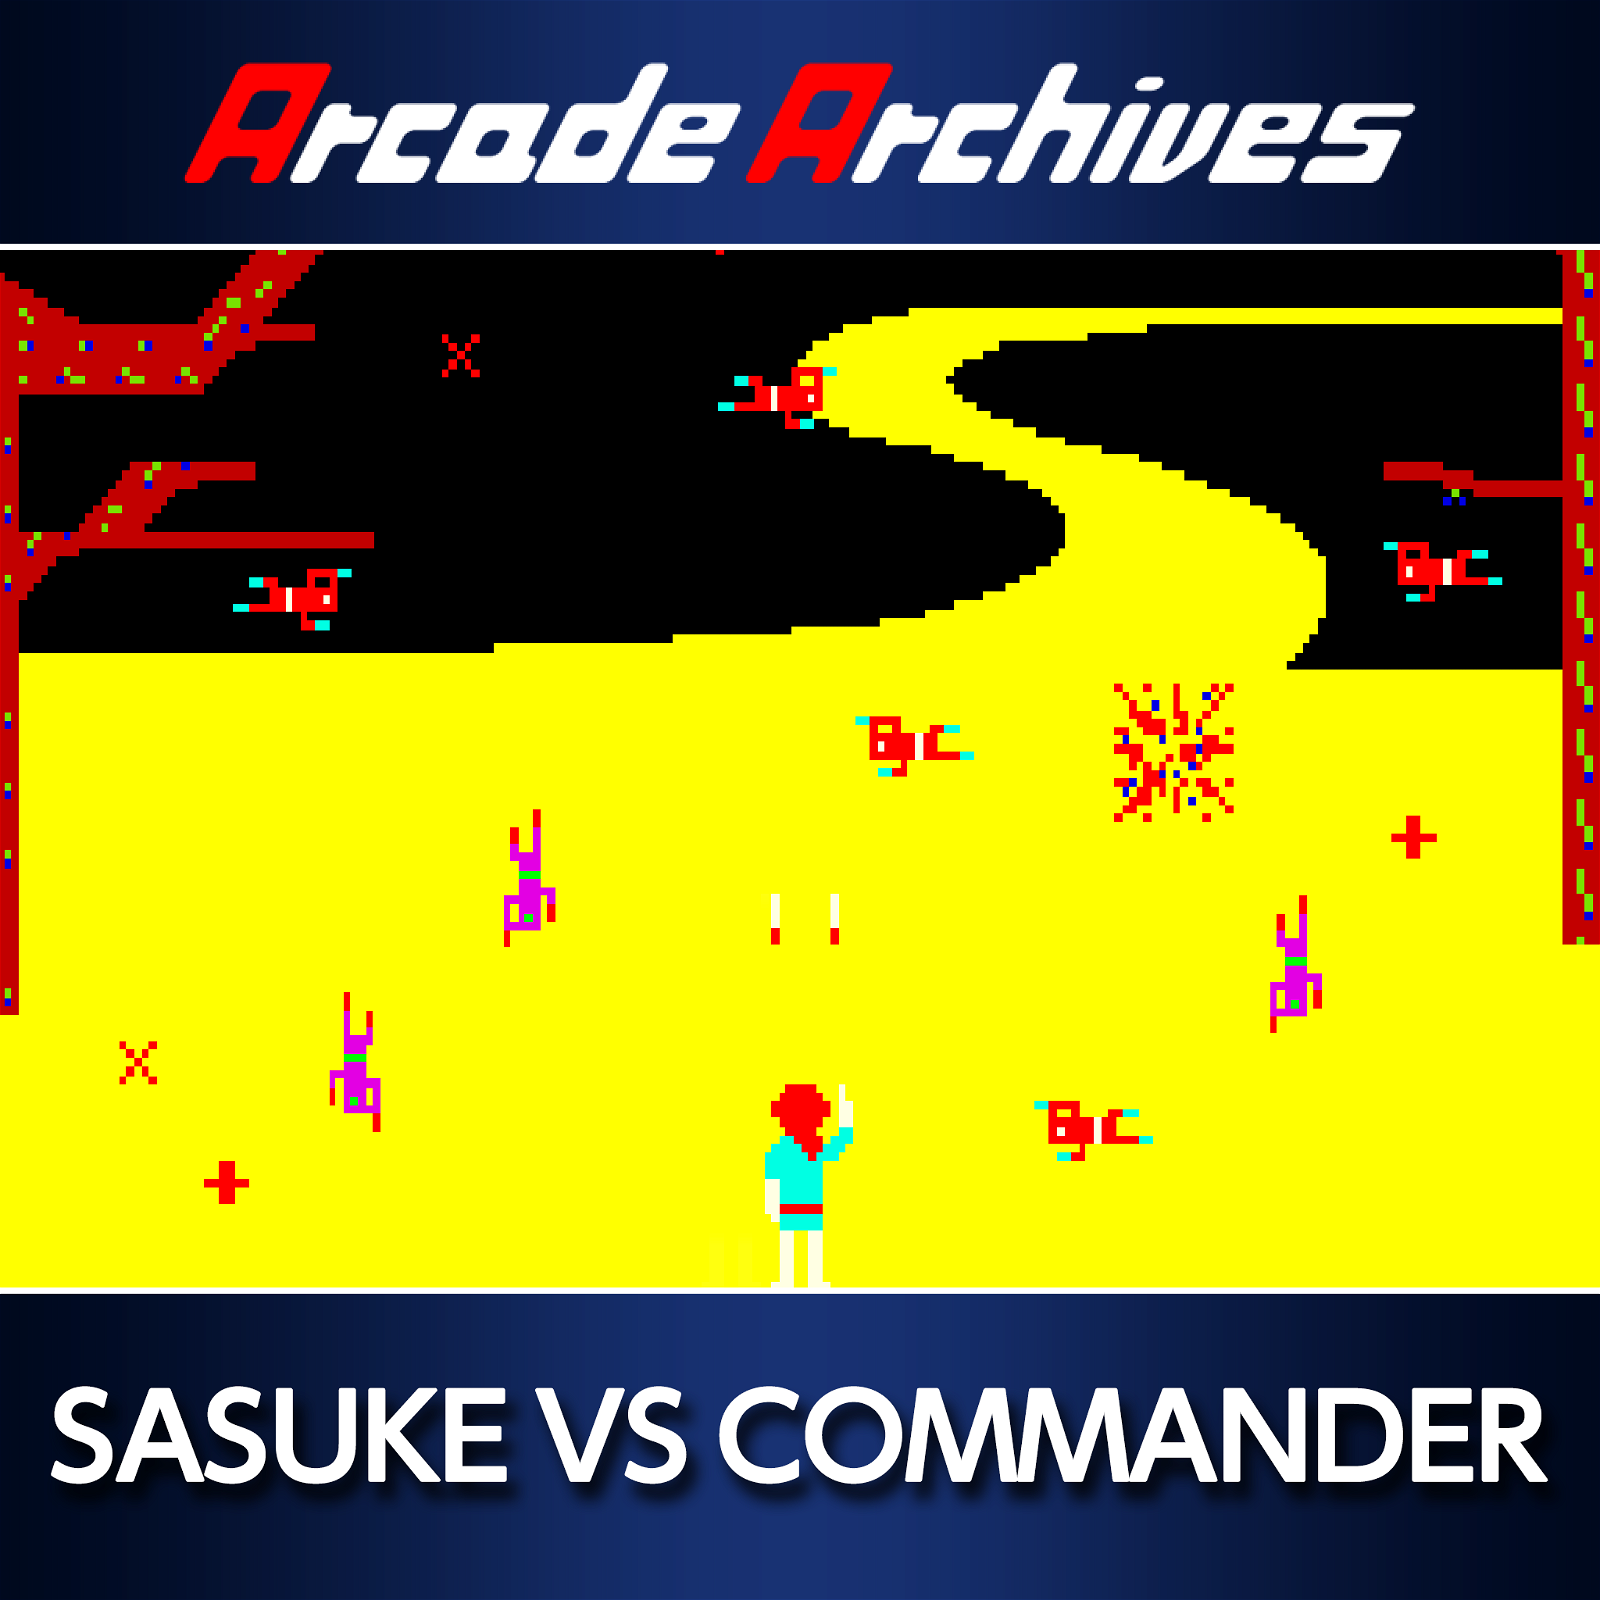 Image of Arcade Archives SASUKE VS COMMANDER